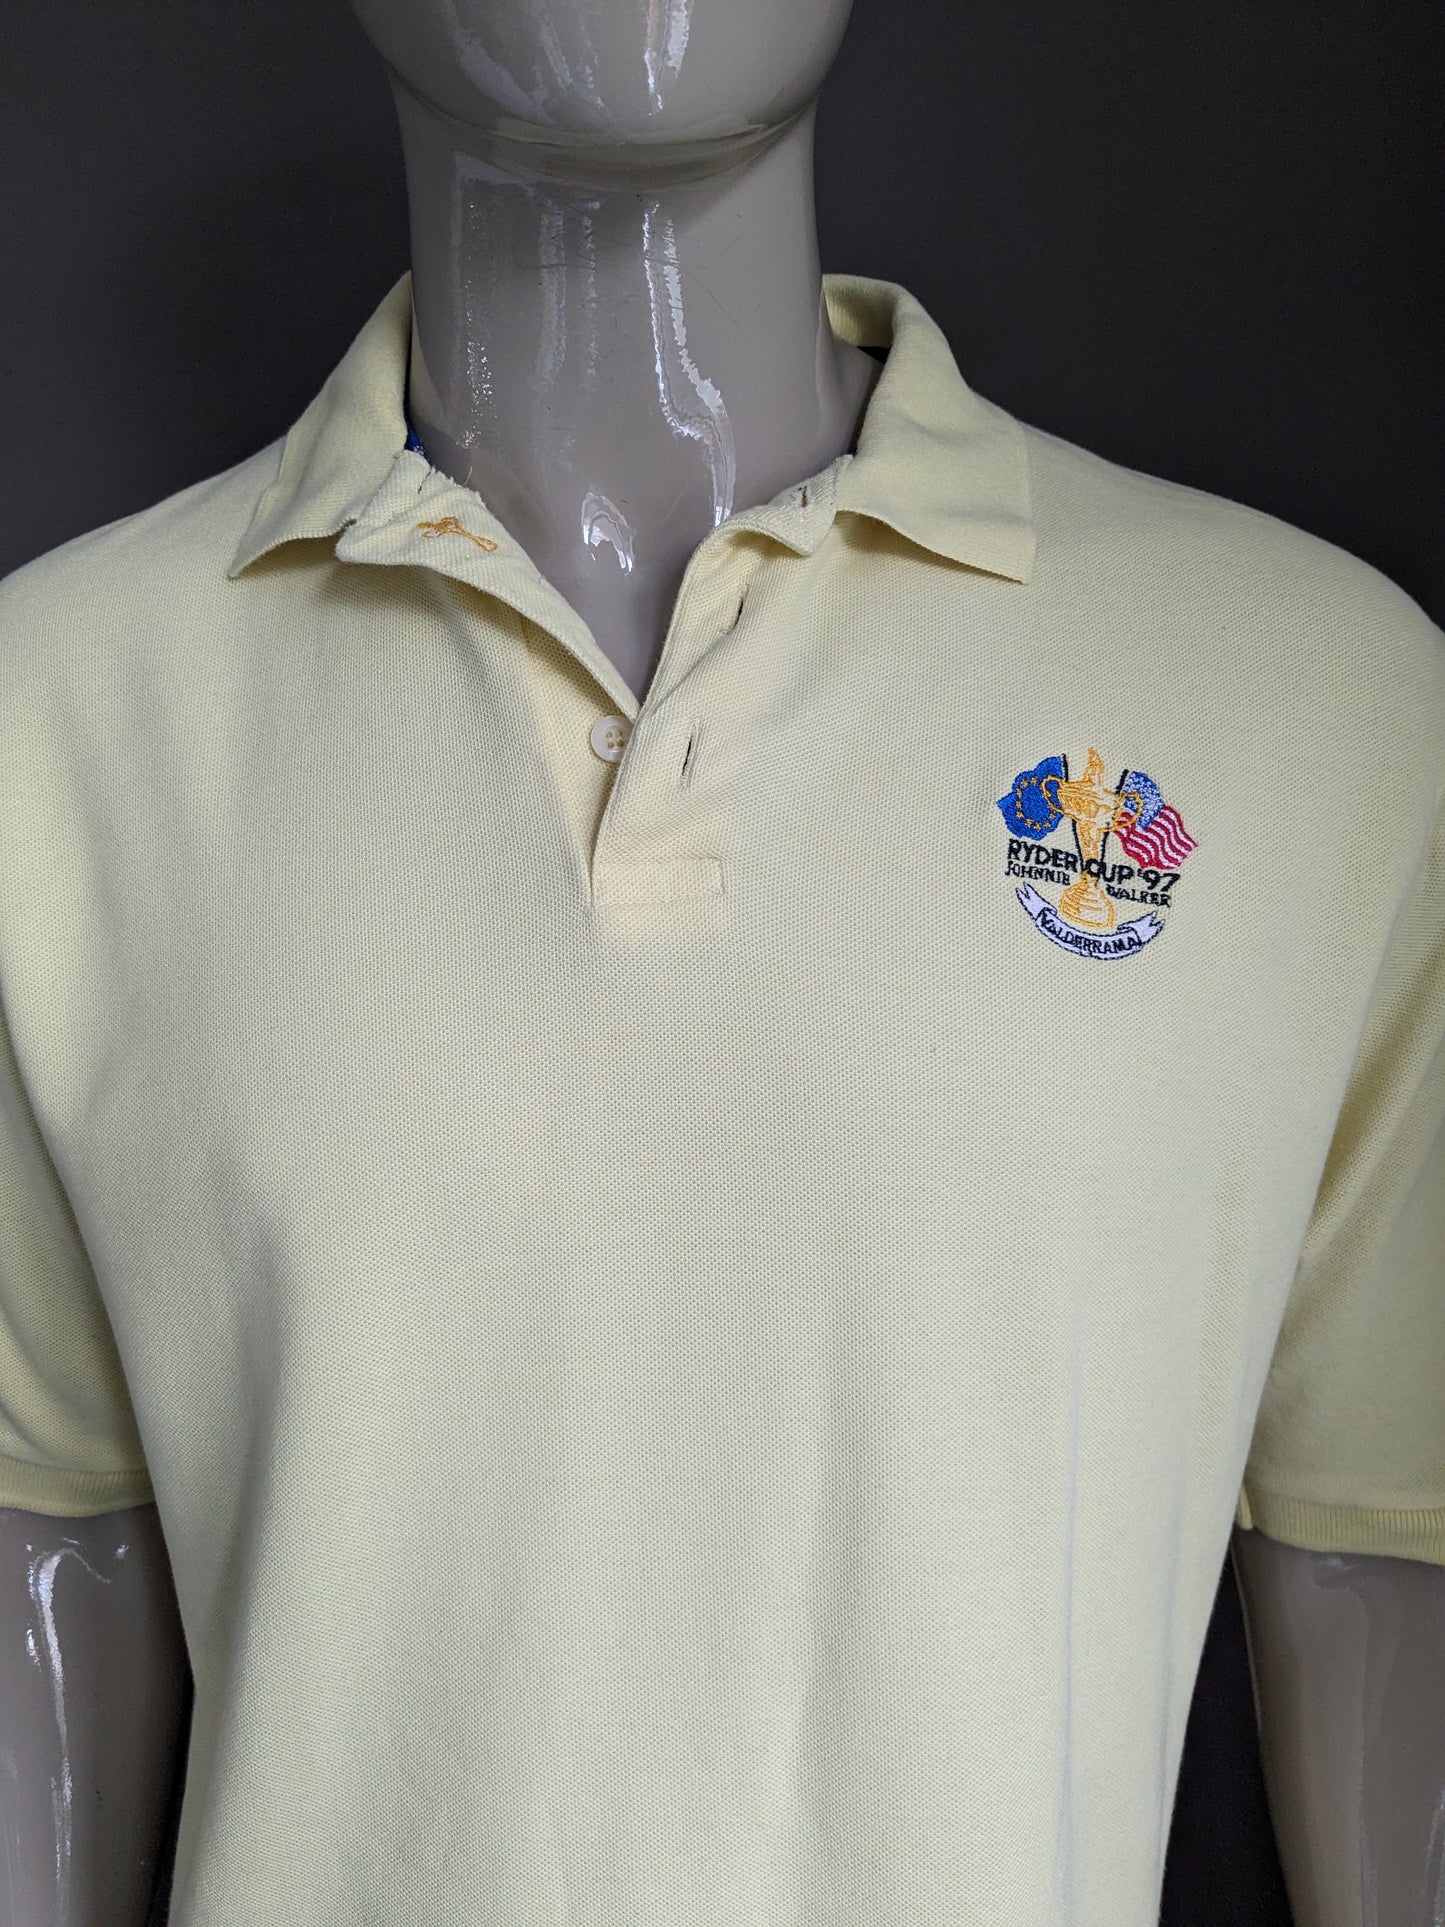 Vintage Glenmuir "Ryder Cup 97" Polo. Hellgelb gefärbt. Größe L.